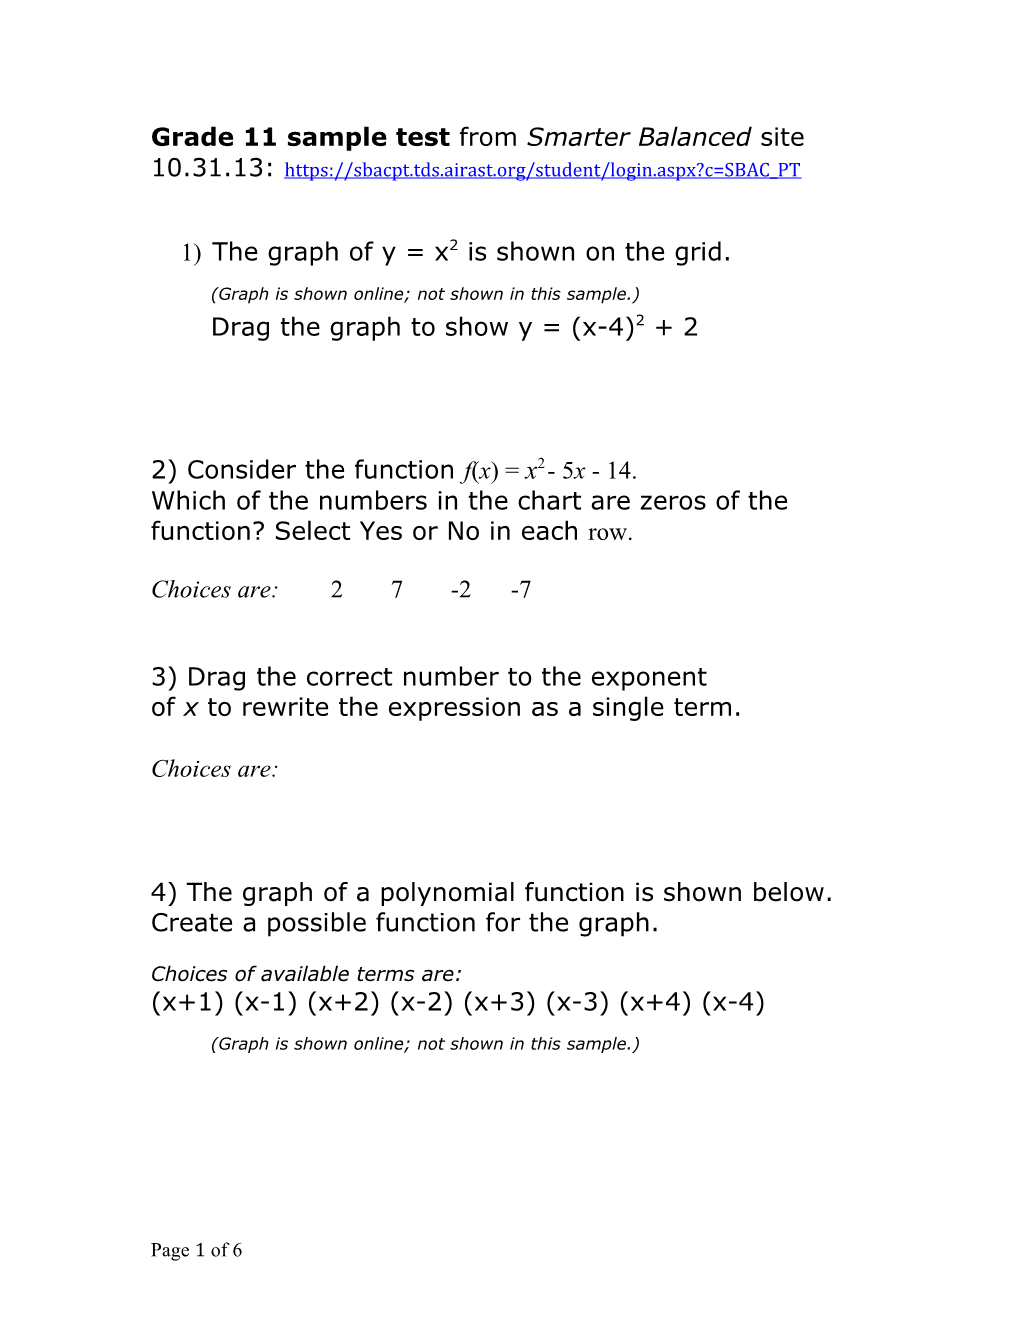 Grade 11 Sample Test from Smarter Balanced Site 10.31.13